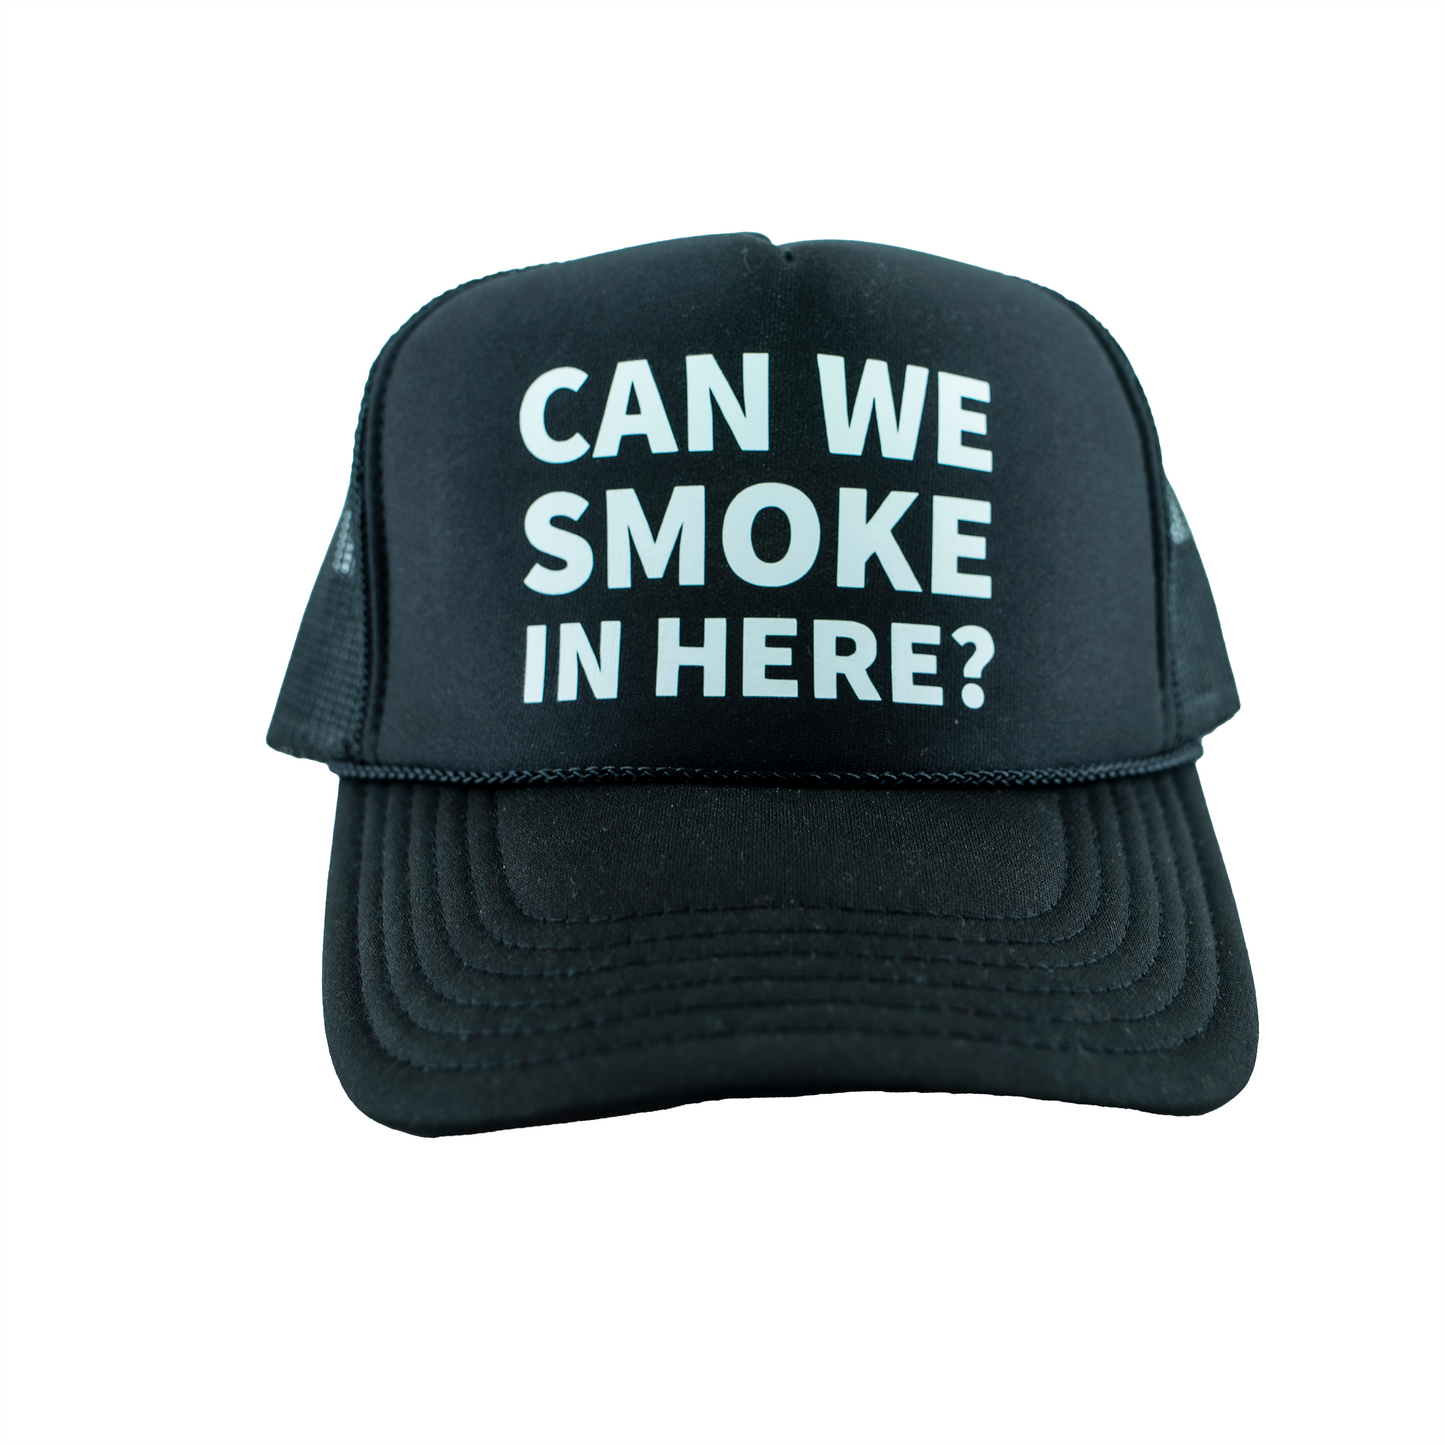 Can We Smoke In Here? Black Trucker Hat